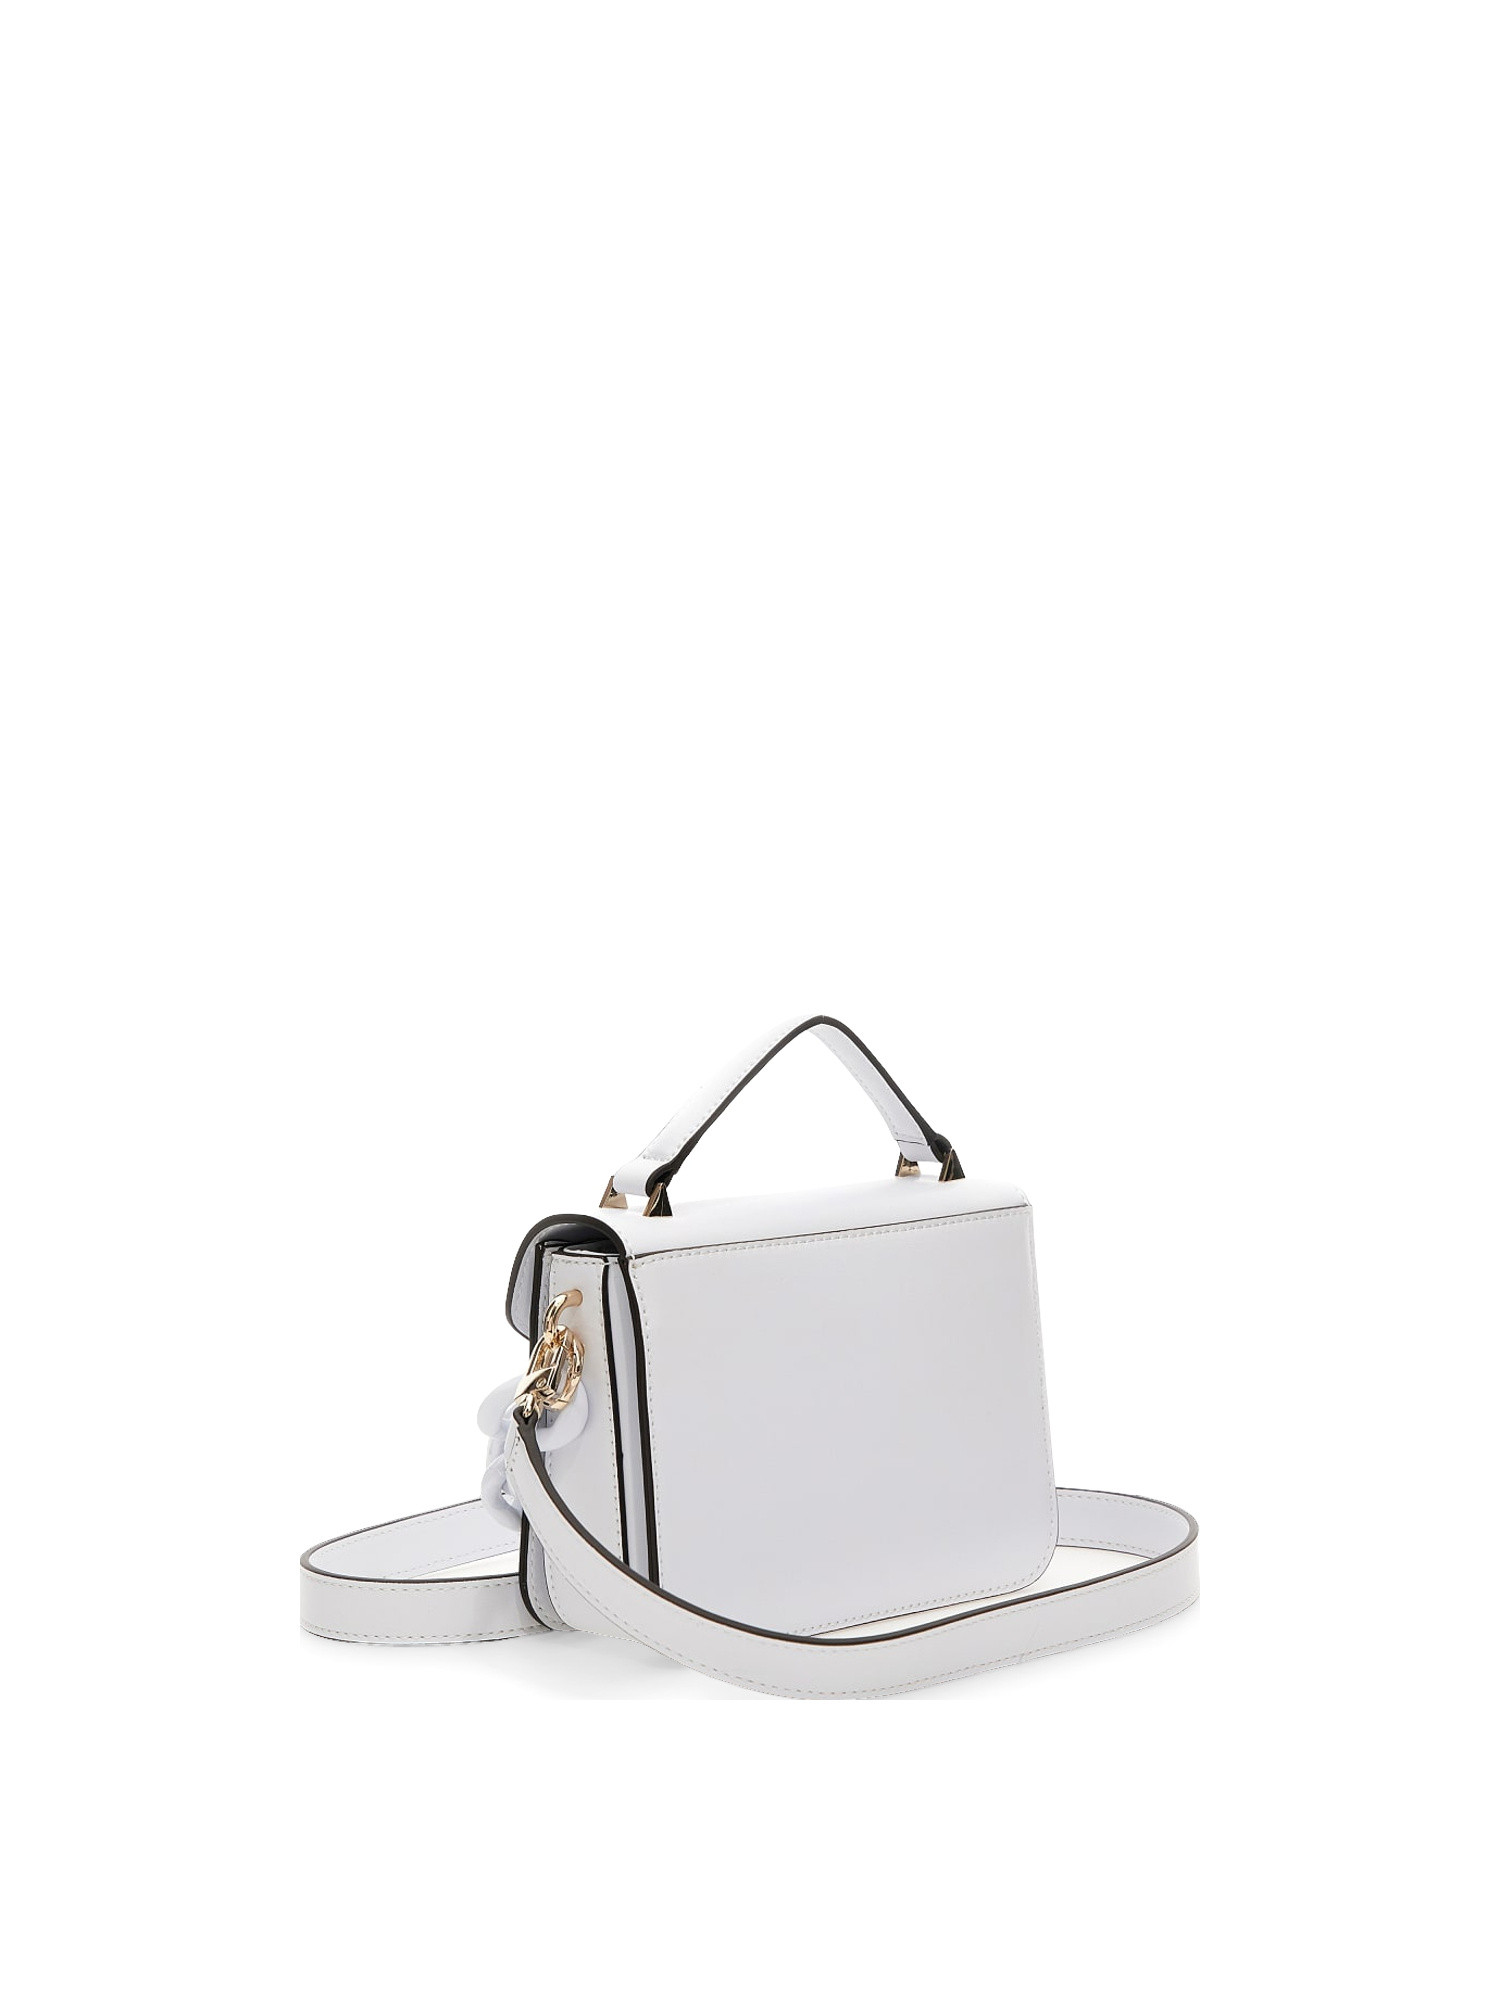 Guess - Corina mini handbag, White, large image number 1